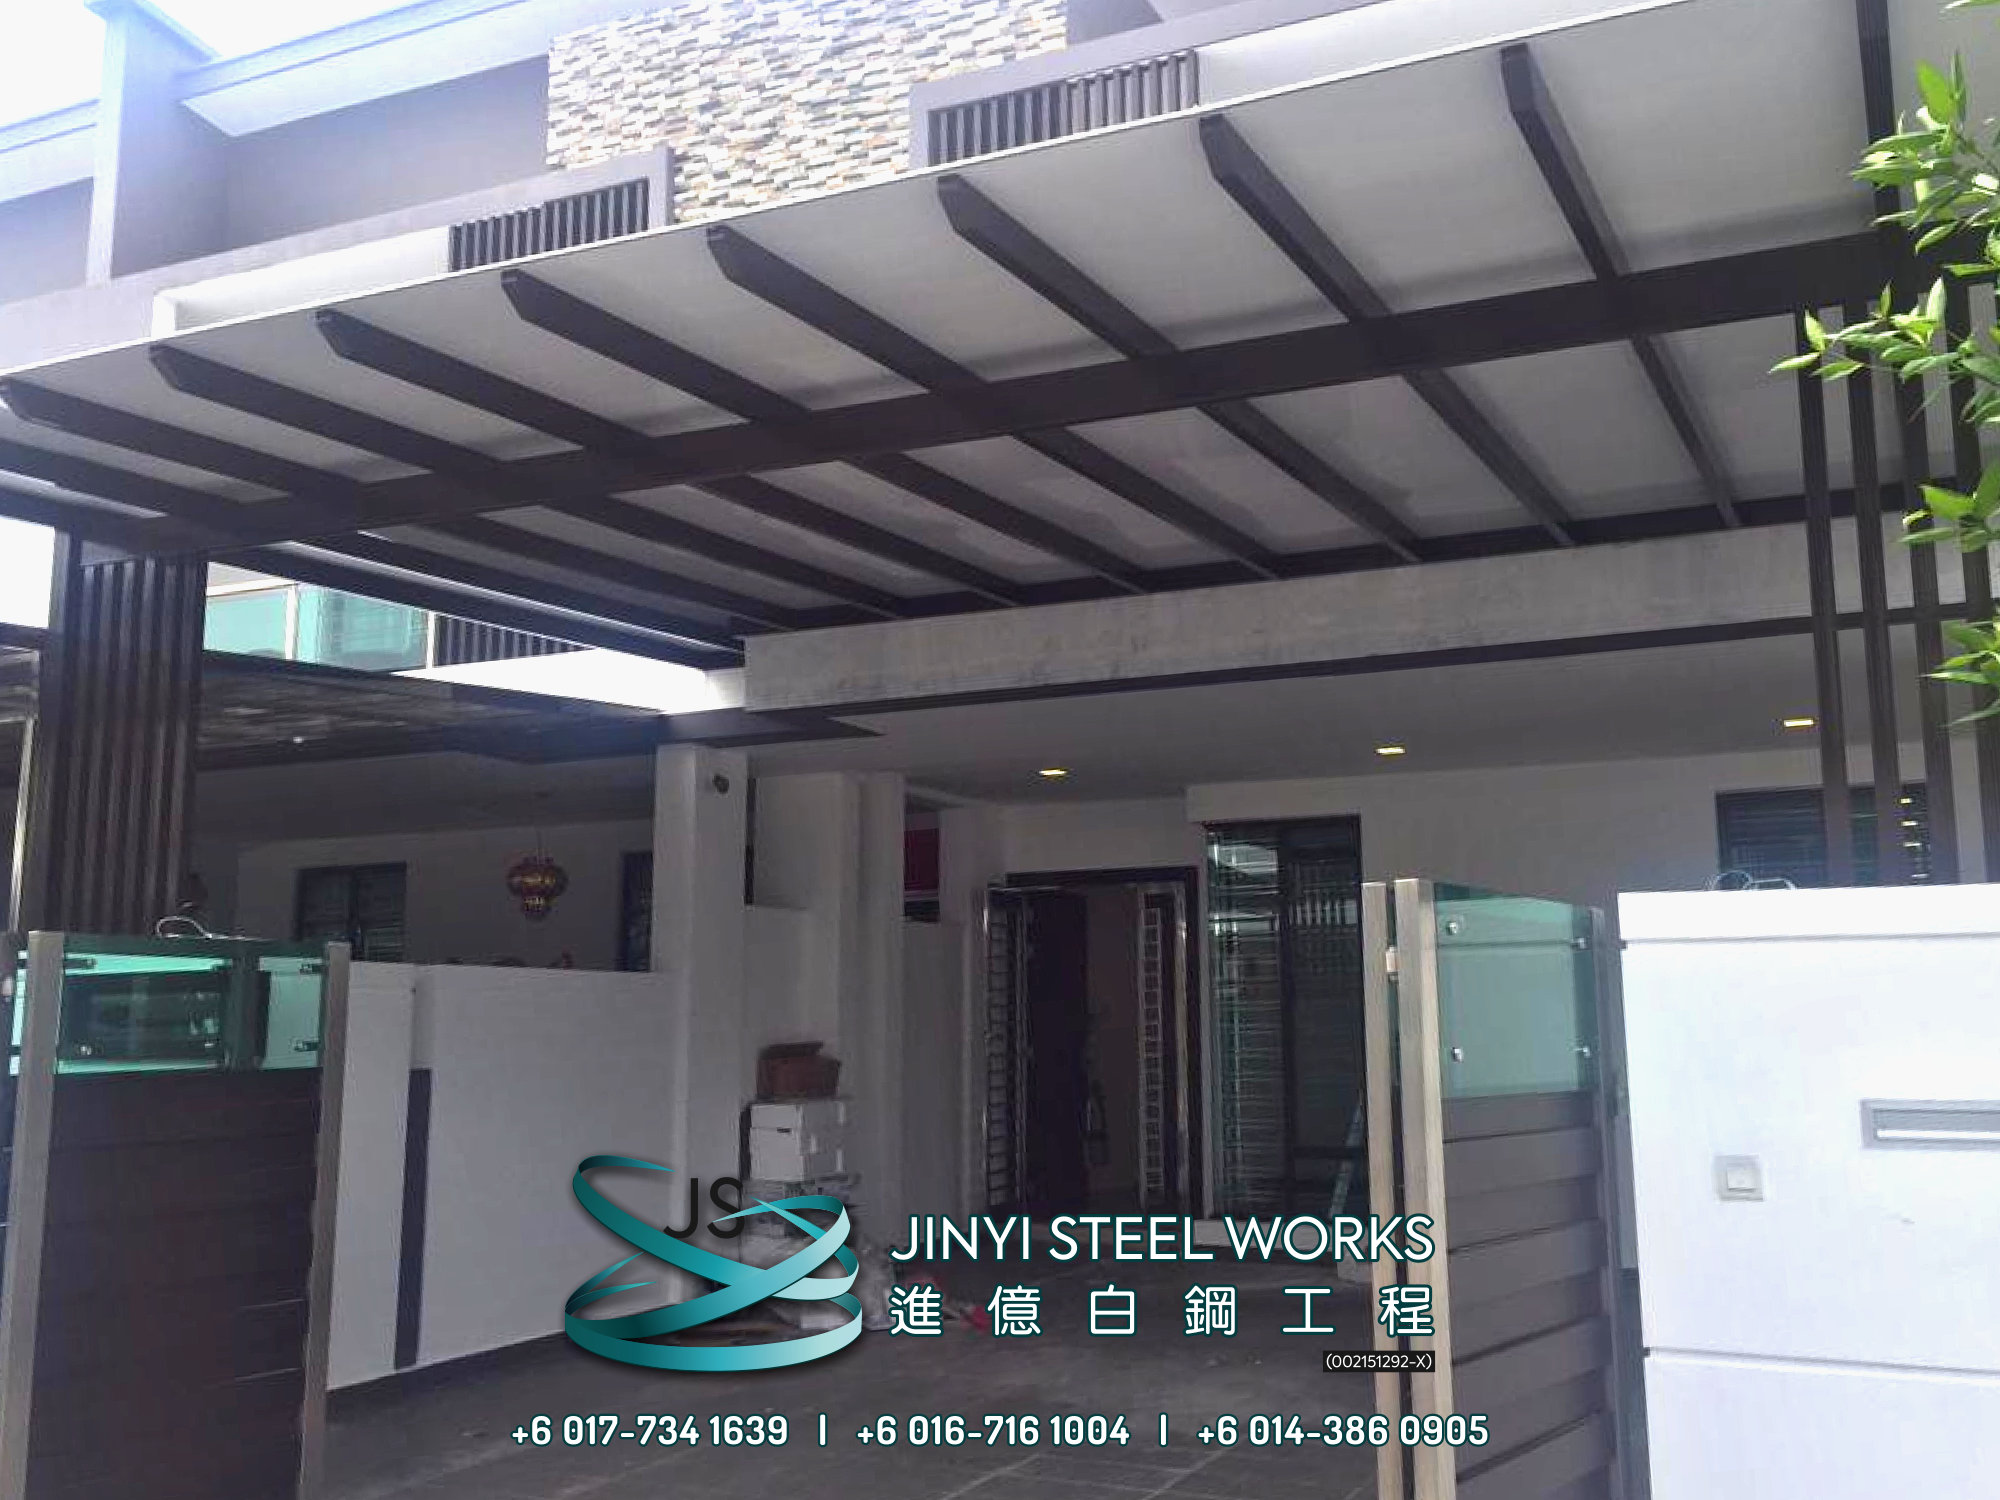 Jinyi Steel Works 铁与不锈钢产品制造商 为您定制钢铁产品与安装 柔佛 马六甲 森美兰 吉隆坡 雪兰莪 彭亨 峇株巴辖 不锈钢制造商 B05